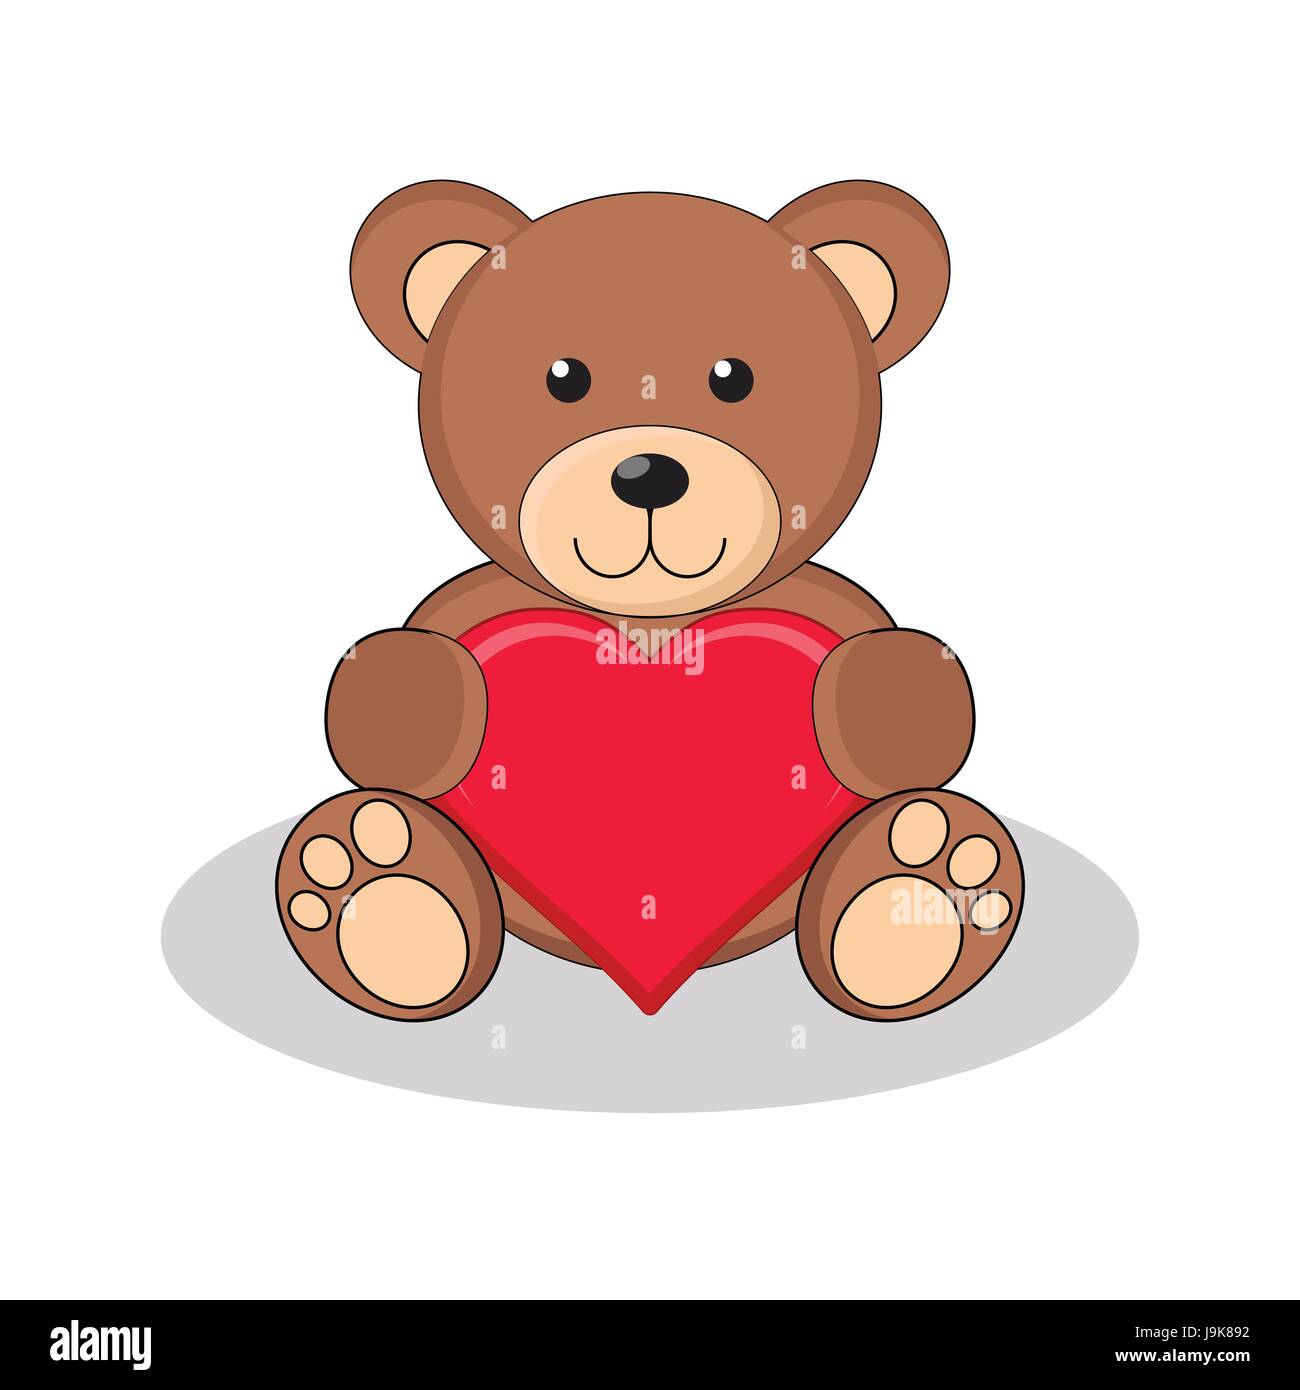 Cute brown teddy bear holding red heart. Vector